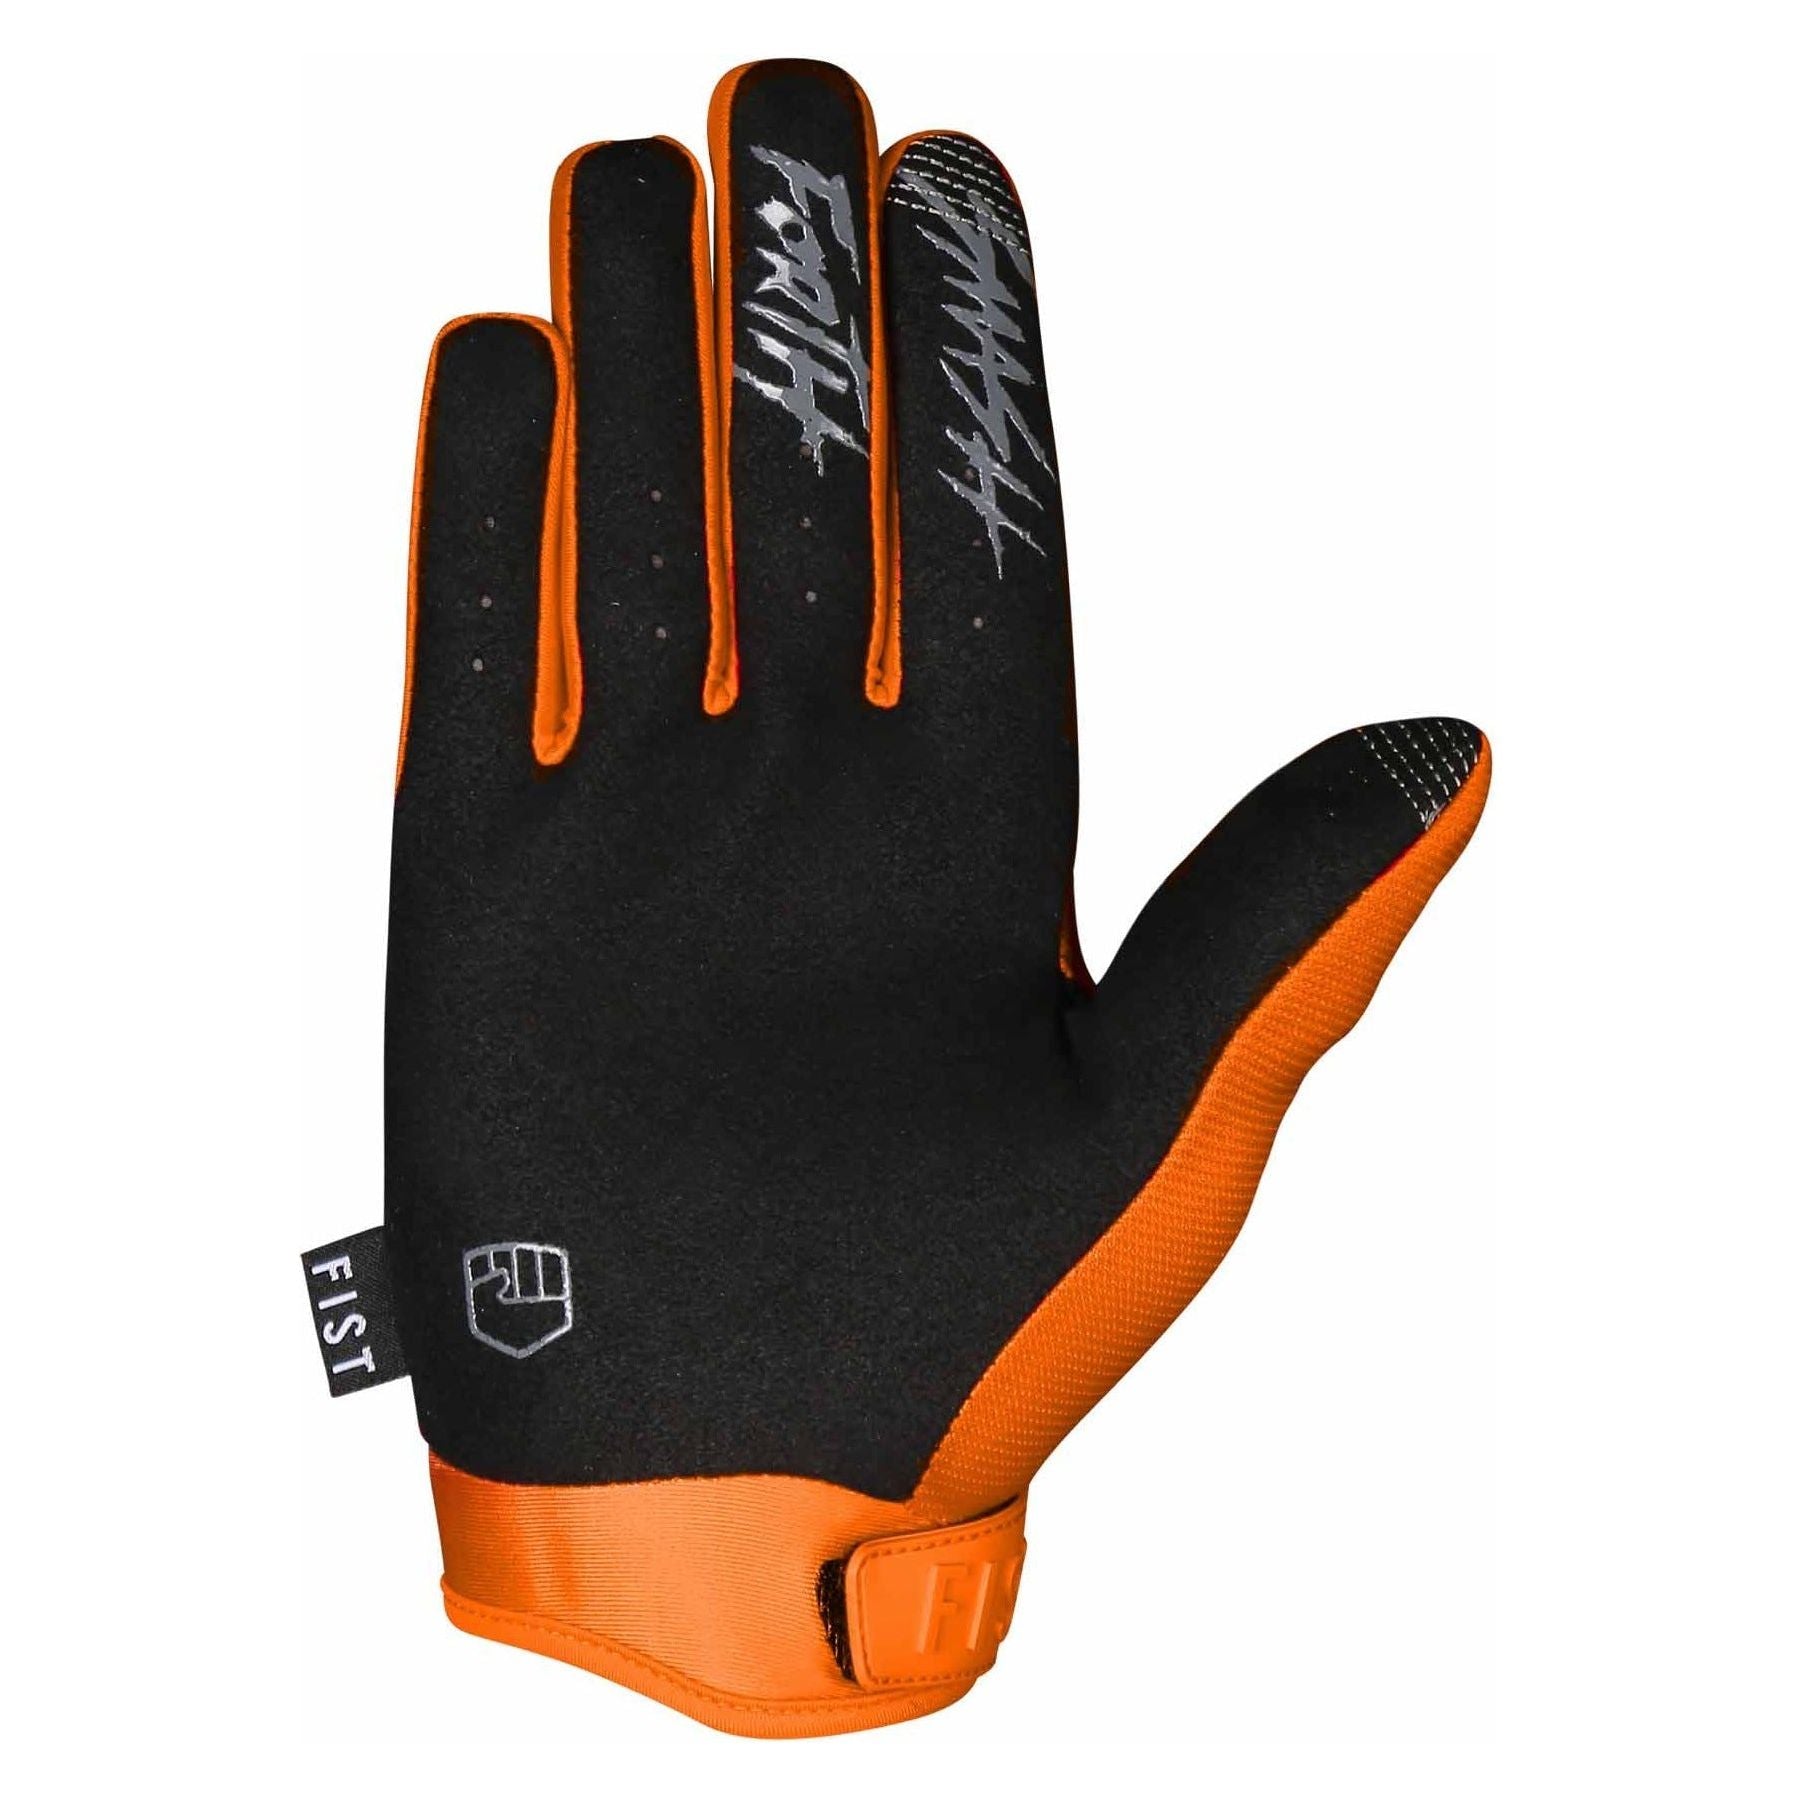 Fist Handwear Stocker Youth Strapped Glove - Youth L - Orange Stocker - Image 2